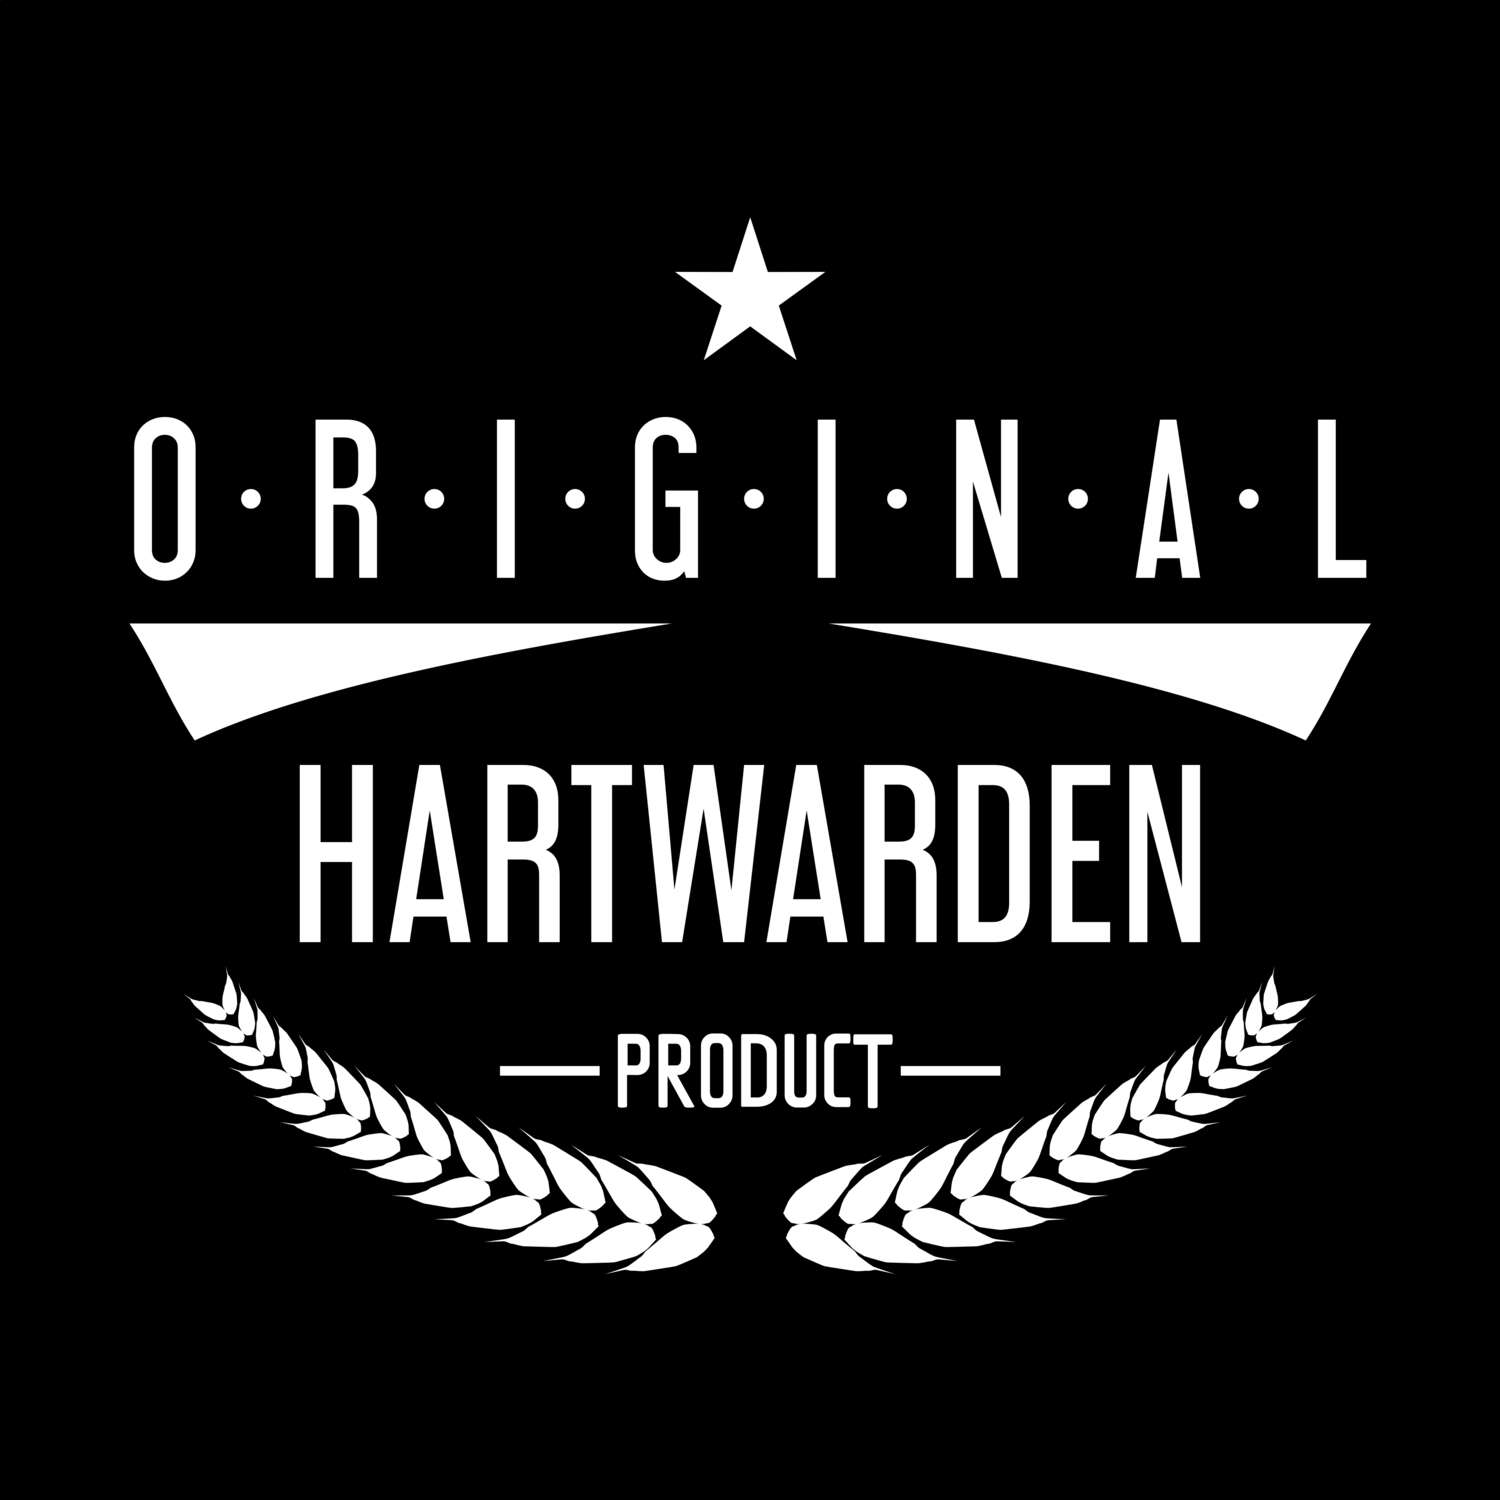 Hartwarden T-Shirt »Original Product«